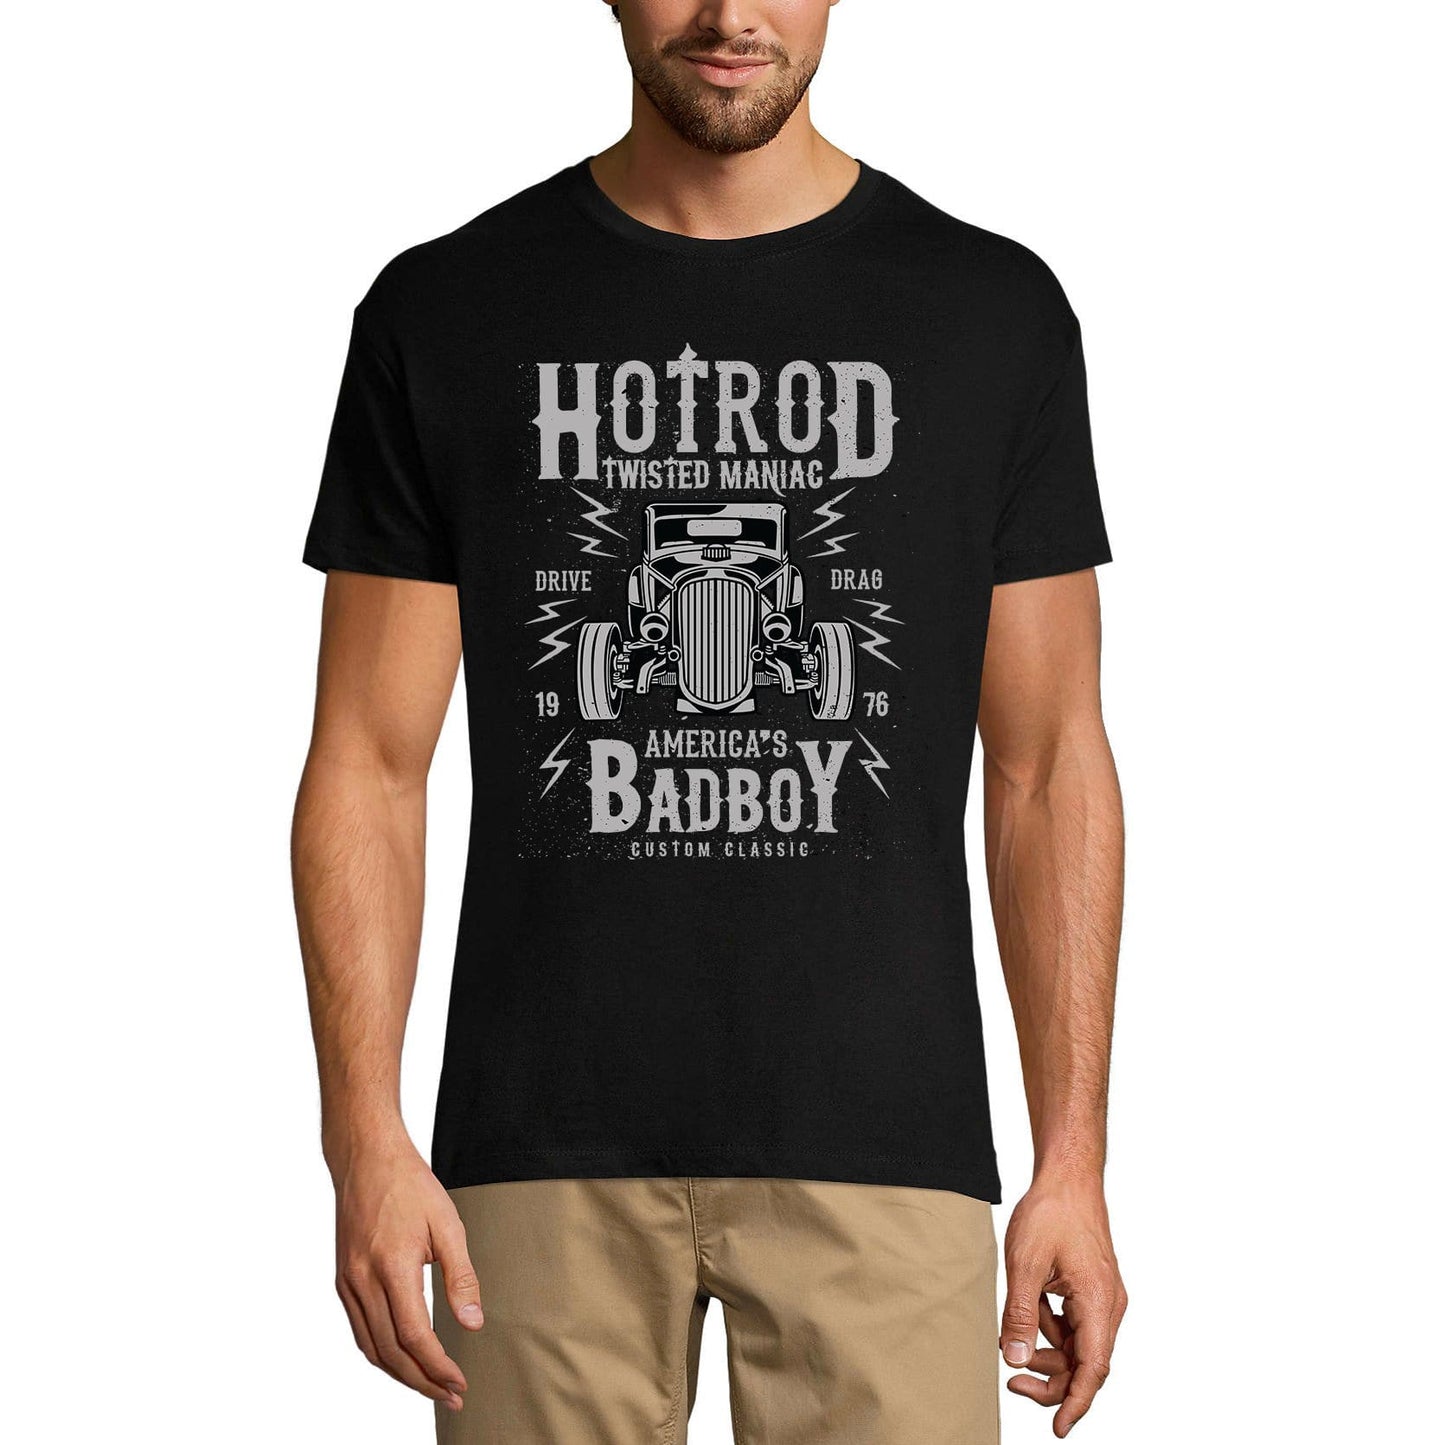 ULTRABASIC Men's Graphic T-Shirt Hotrod Twisted Maniac - America's Badboy Custom Classic